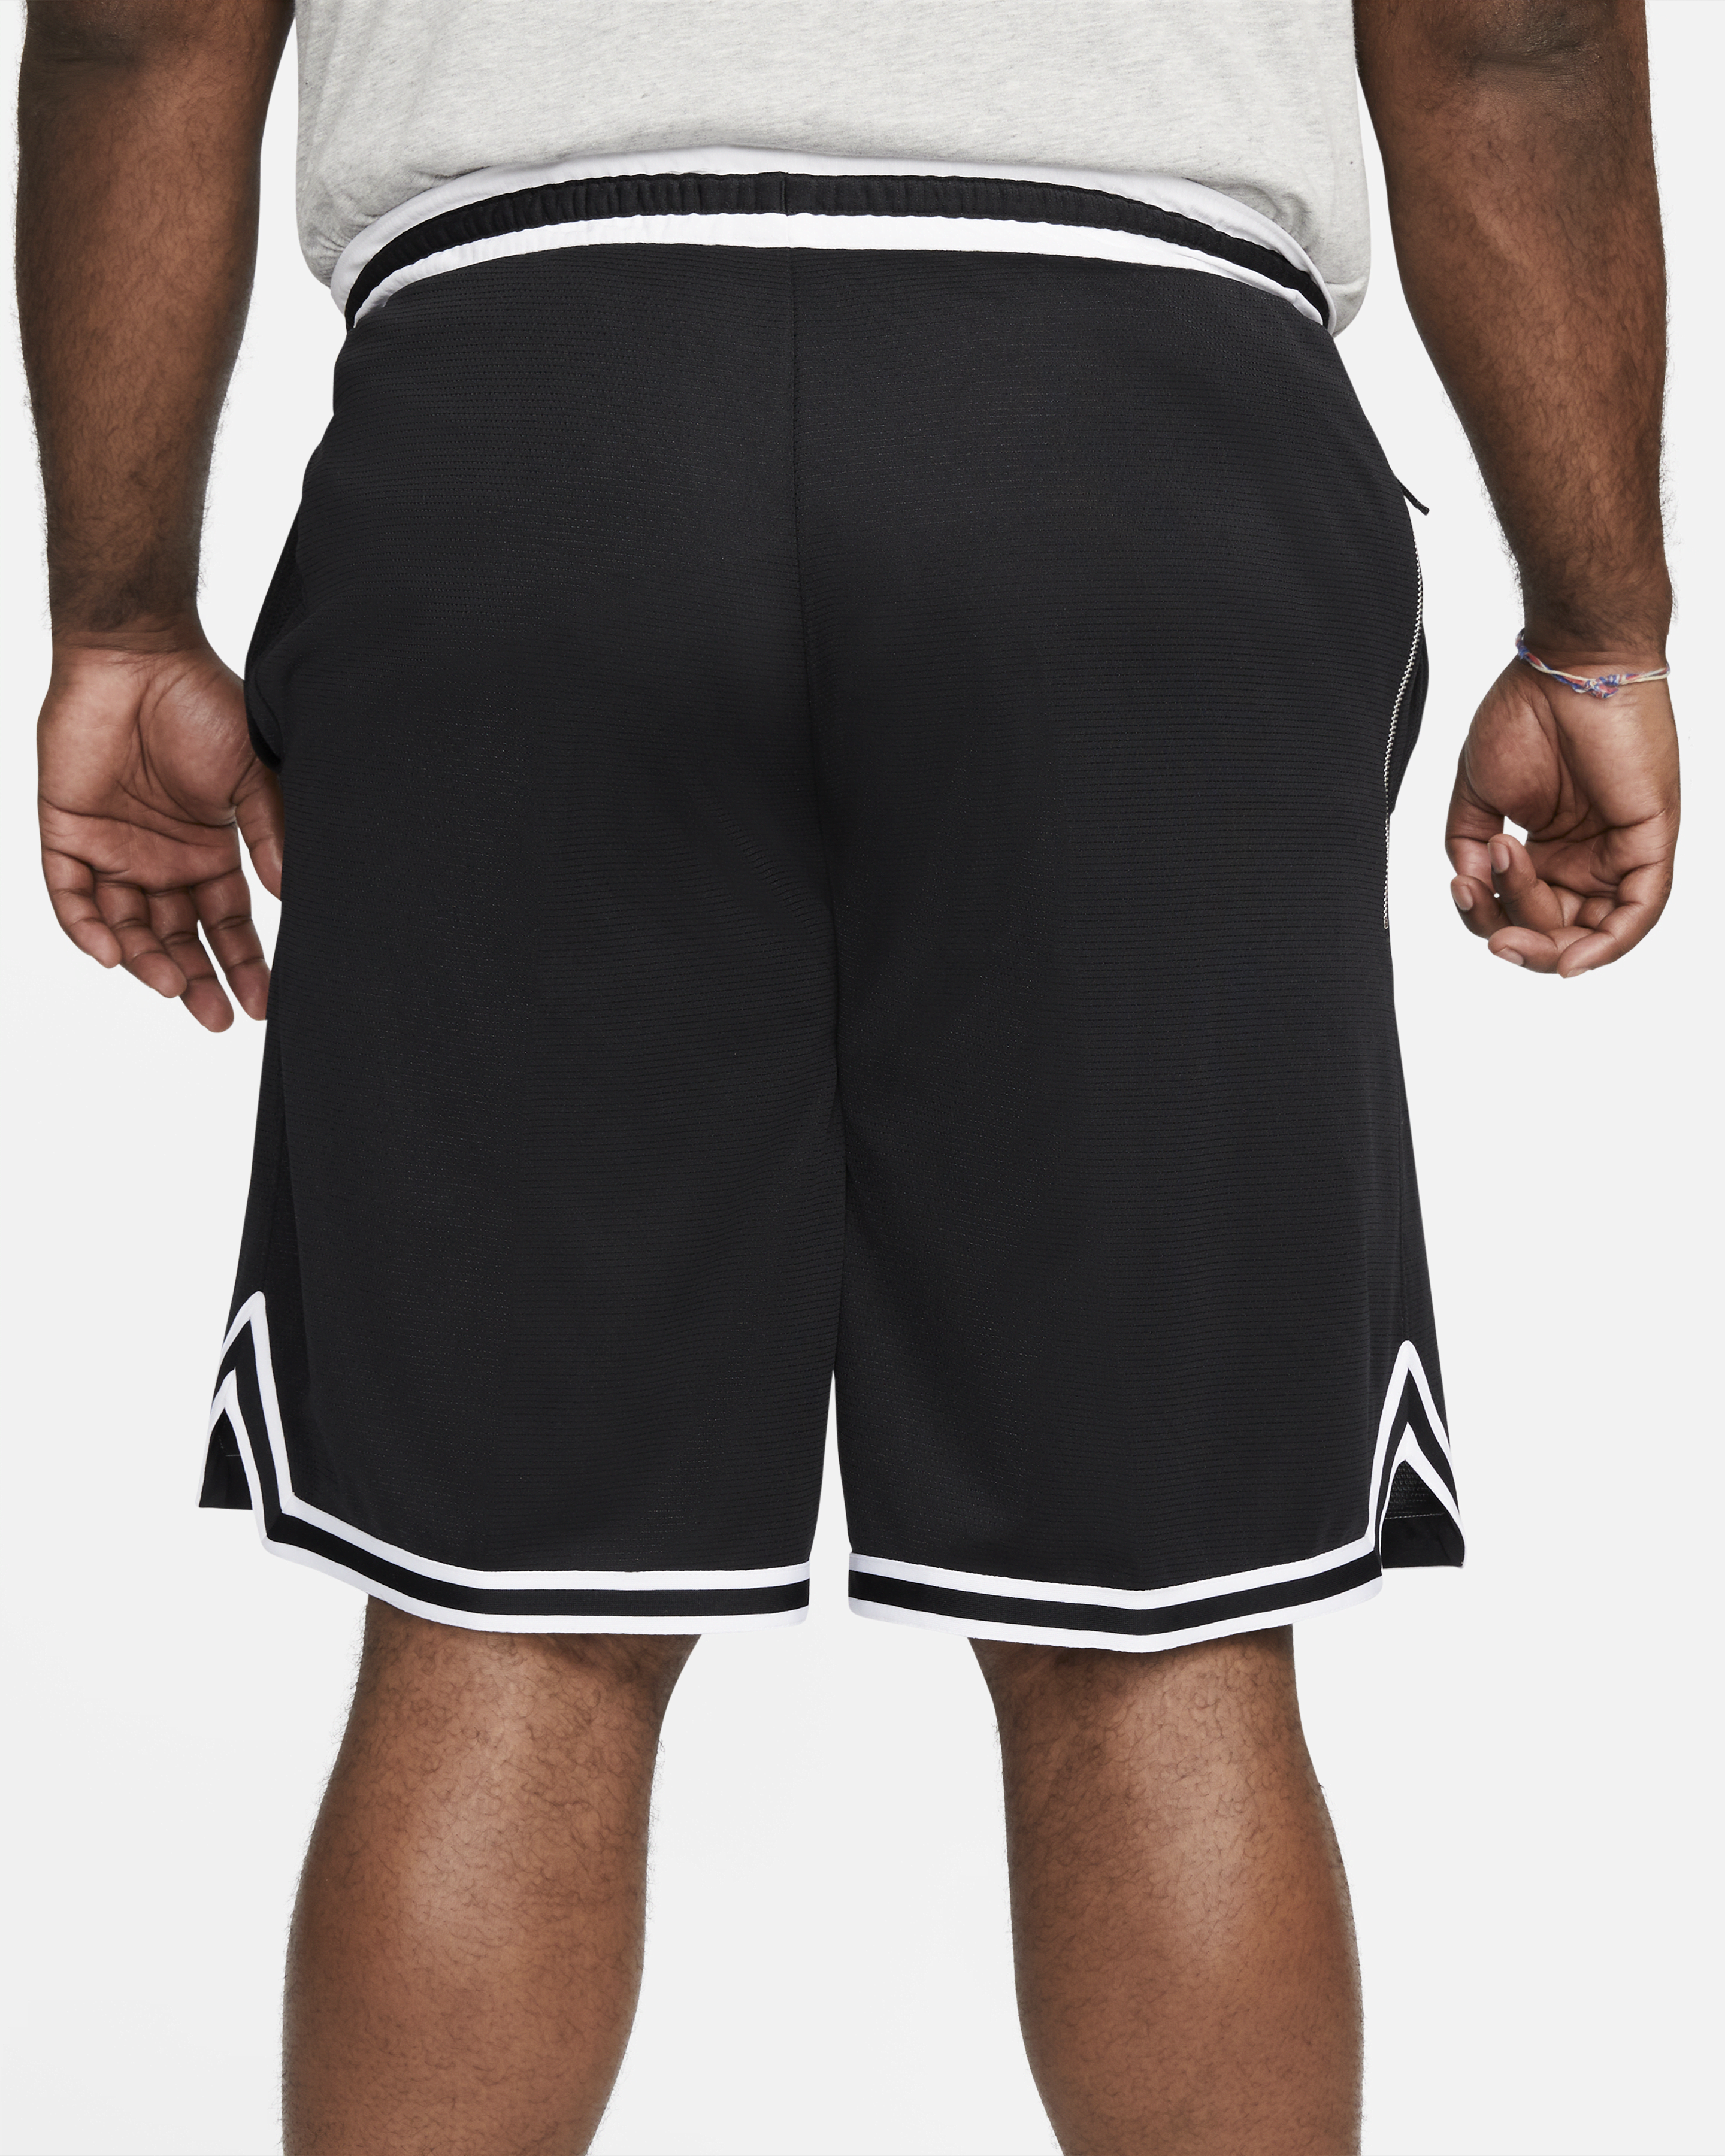 Basketball Short